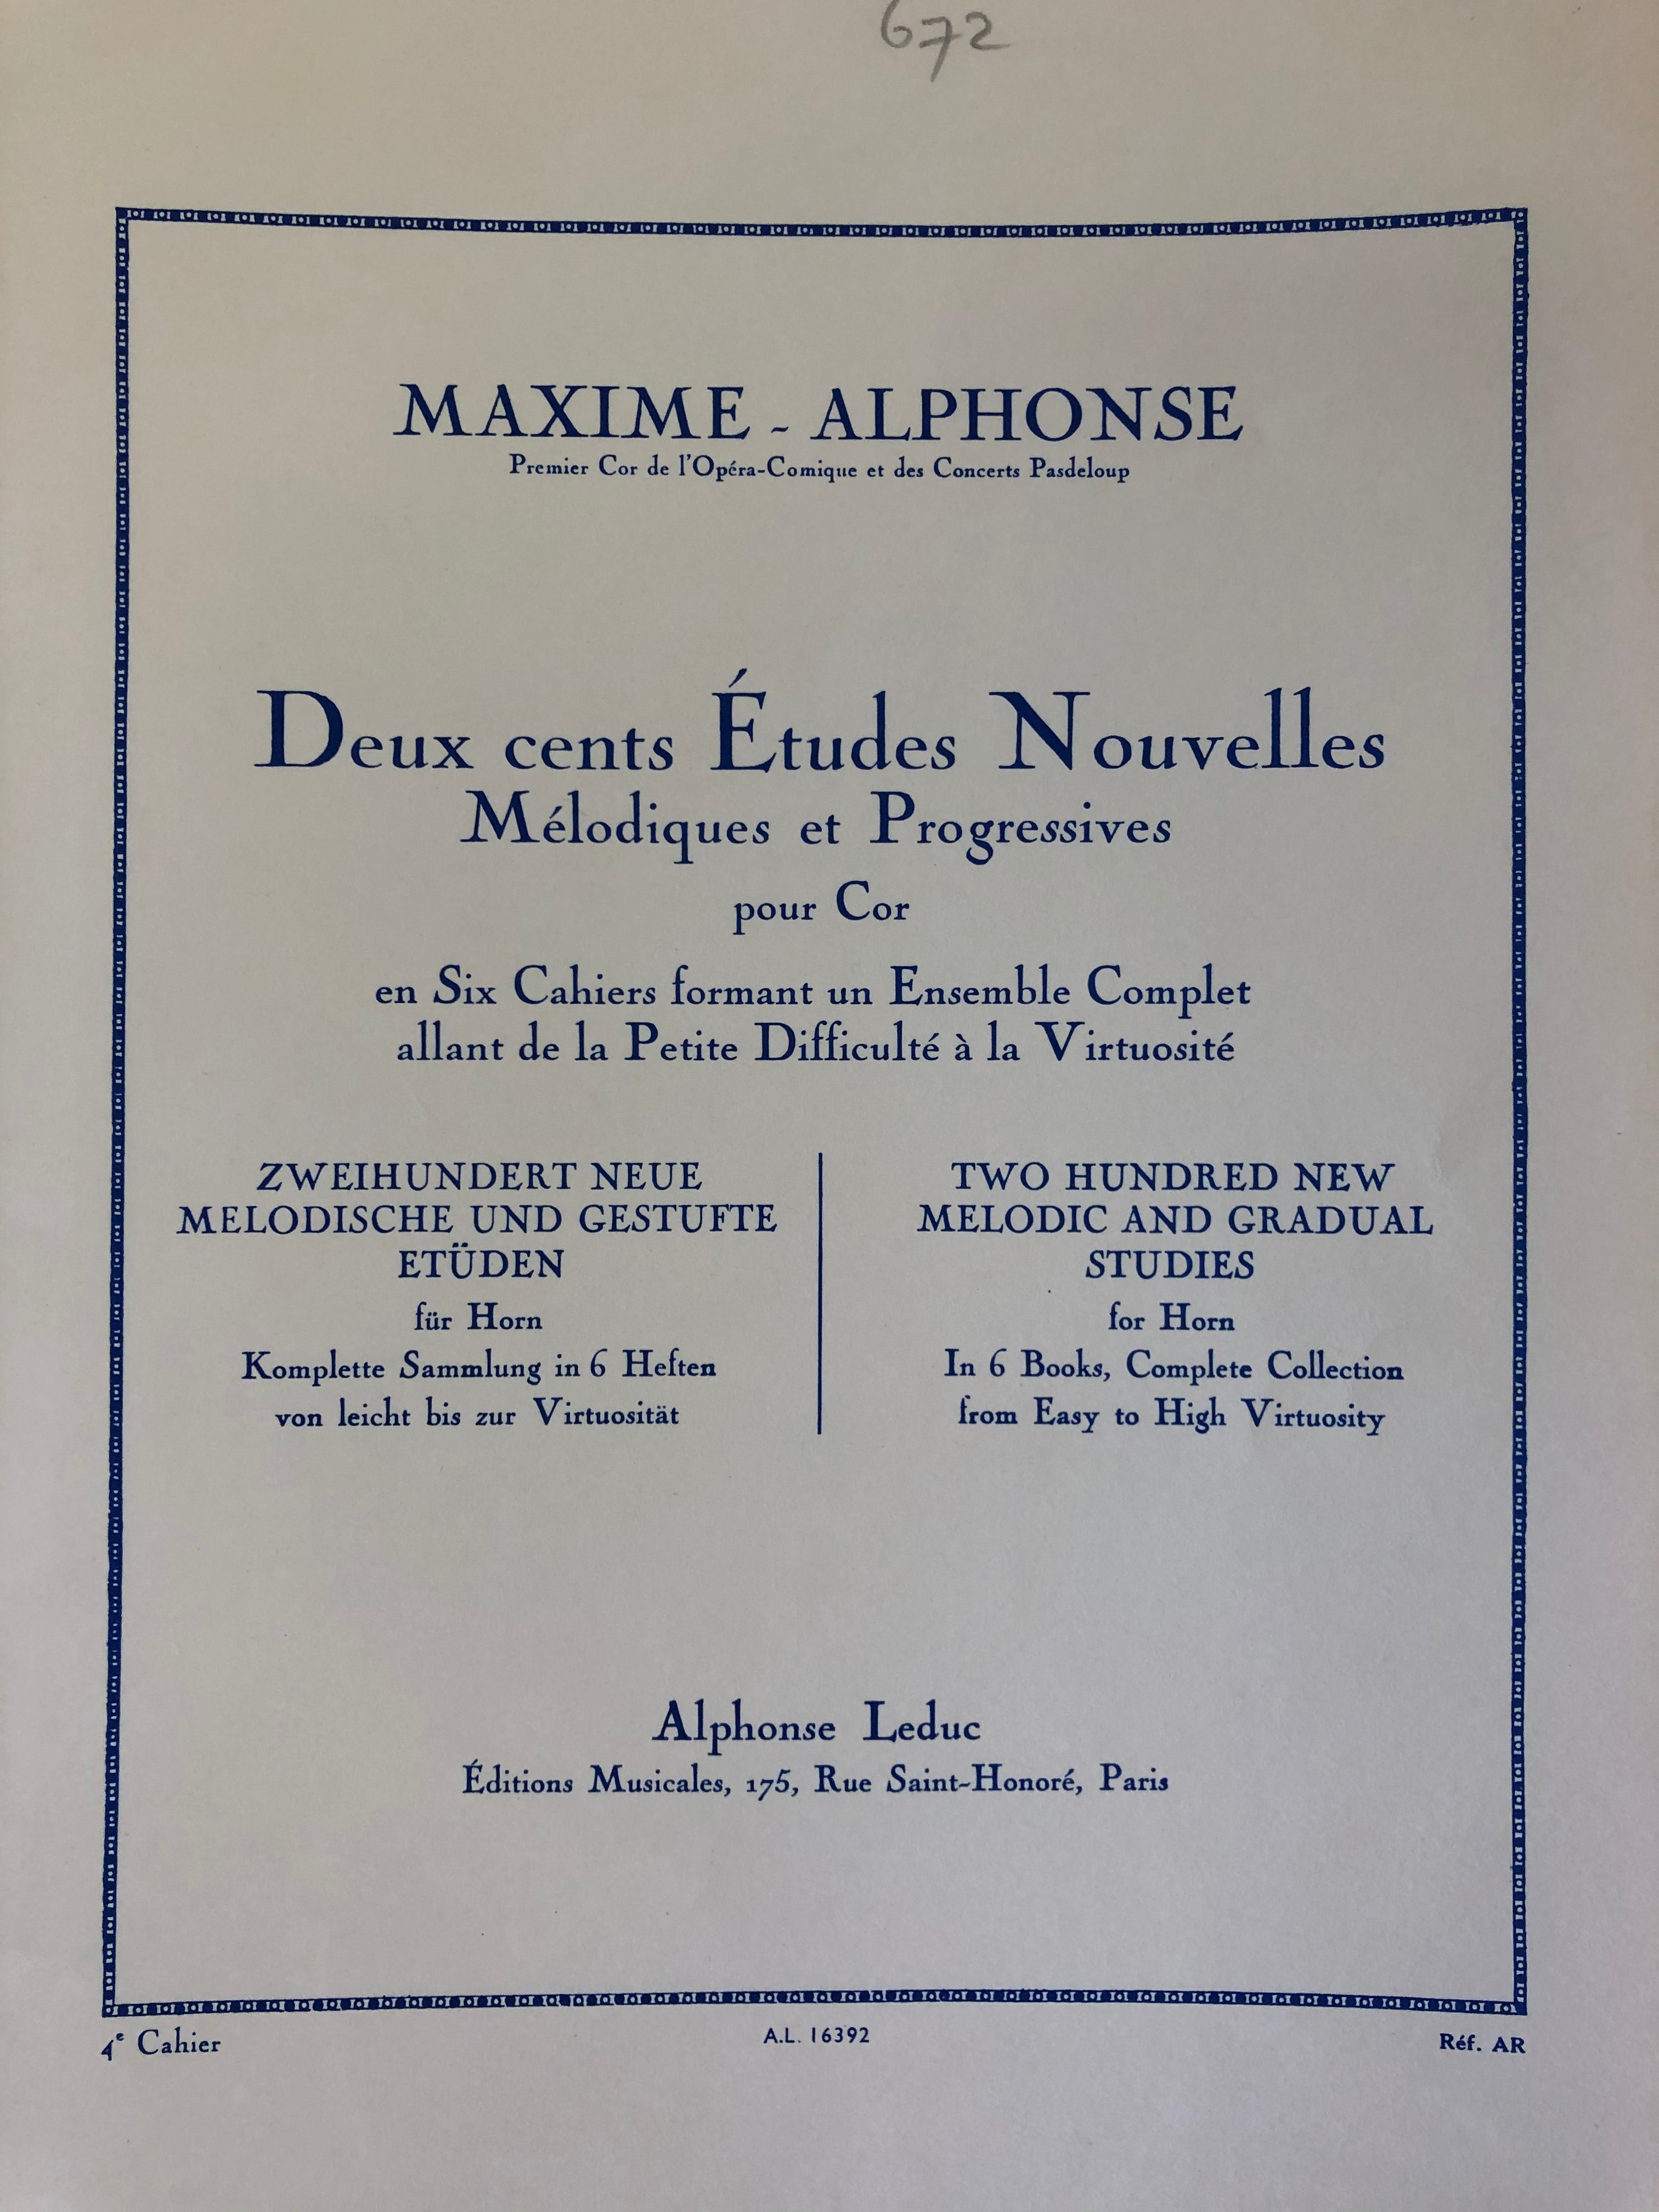 200 Etudes Nouvelles Mélodiques et Progressives, Maxim Alphonse, Horn, deel 4 - Scattando Verkleedhuis